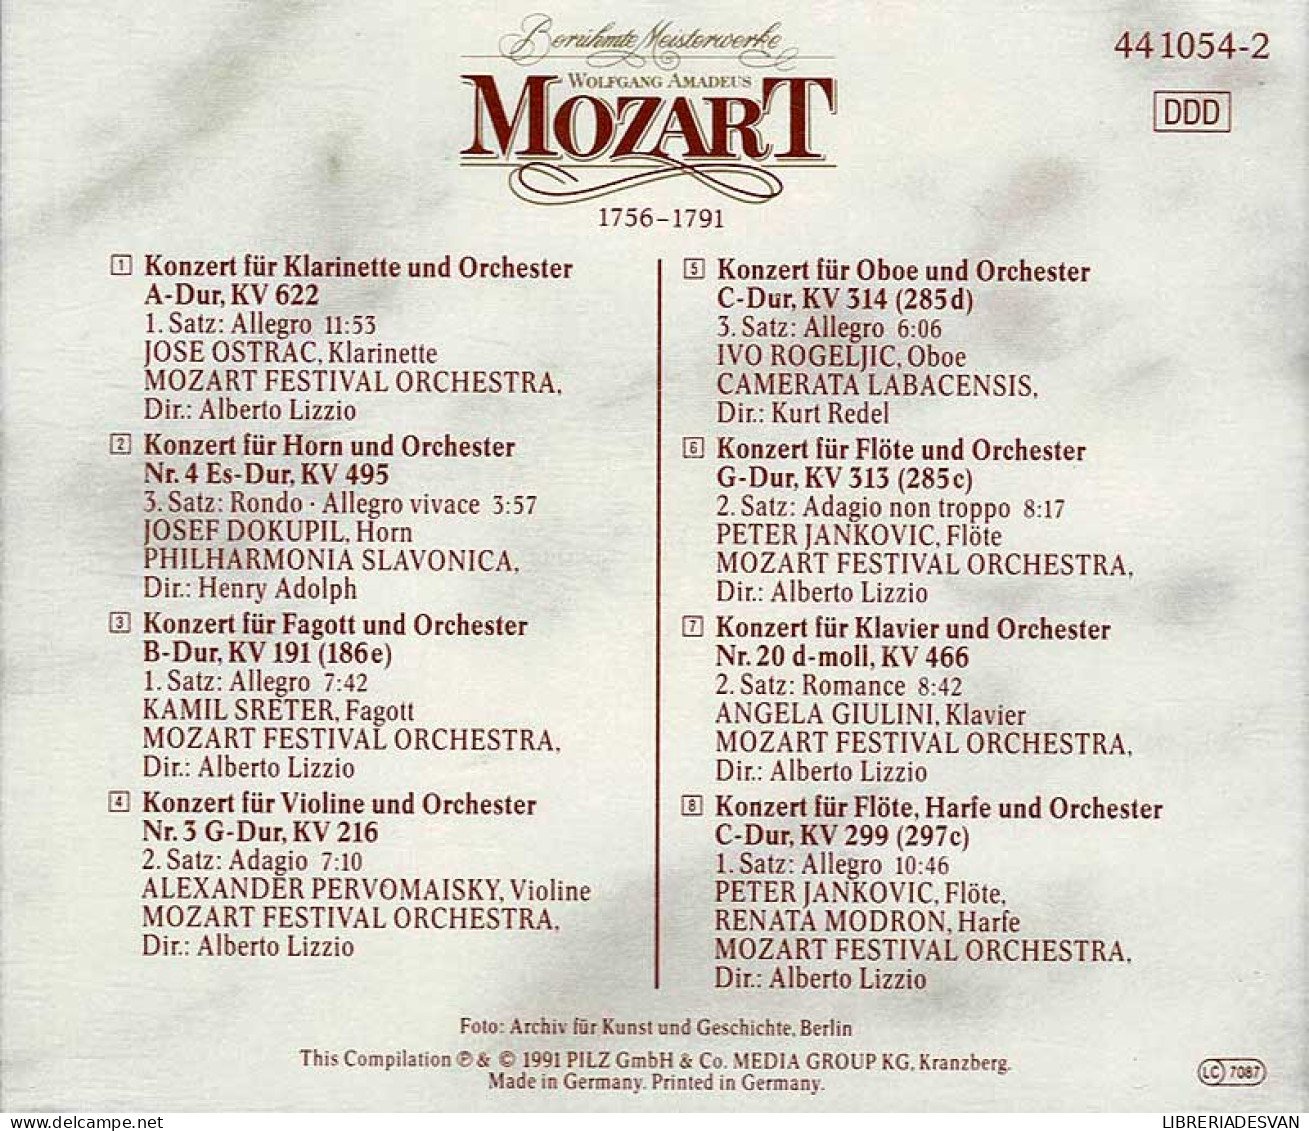 Wolfgang Amadeus Mozart - Beruhmte Meisterwerke Vol. 3. CD - Classique